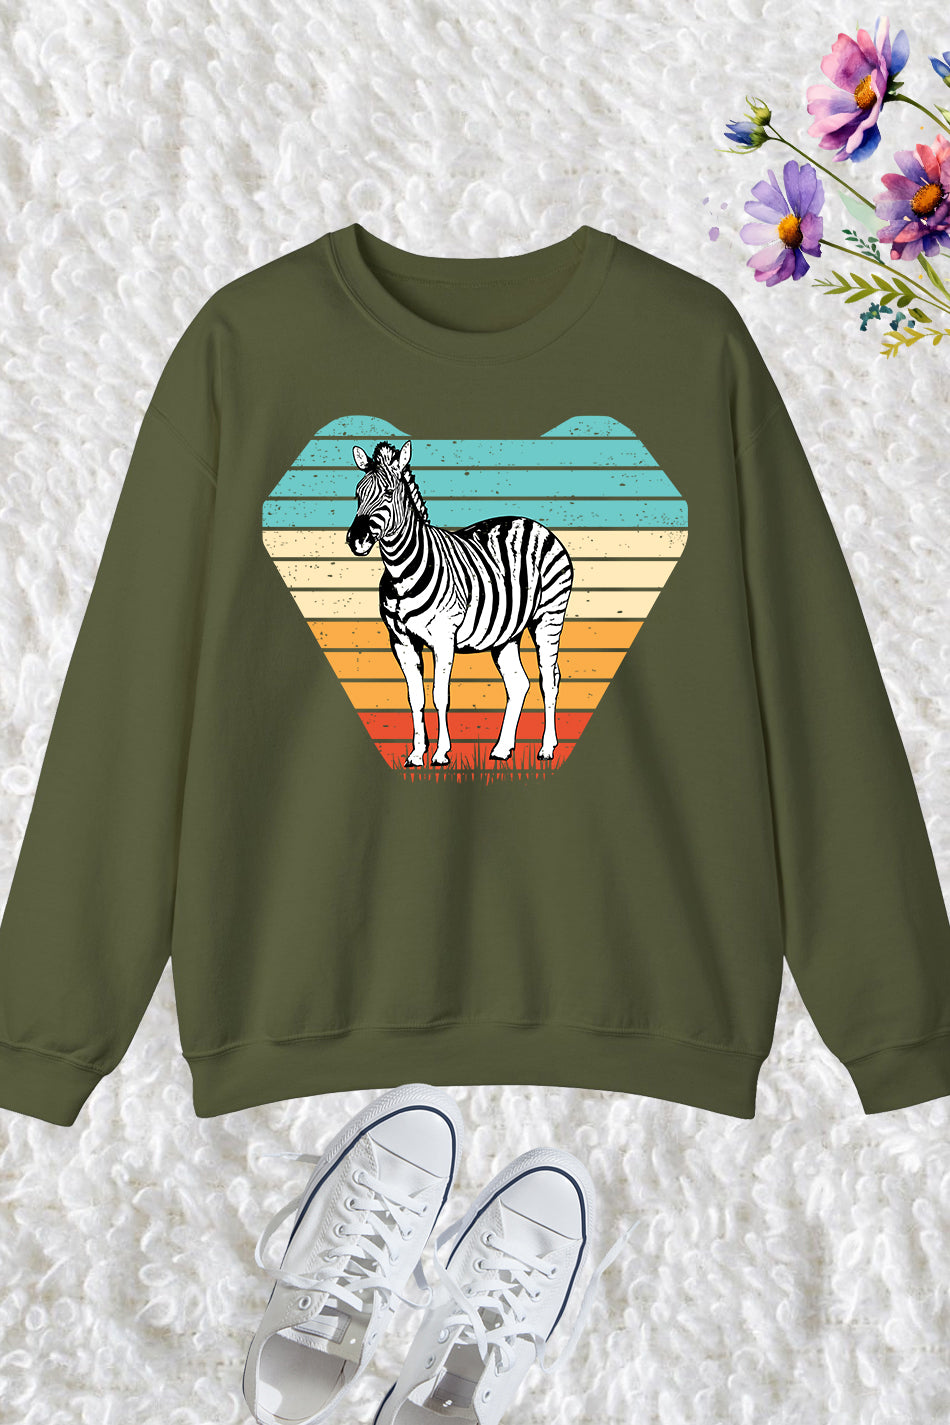 Vintage Retro Zebra Sweatshirt